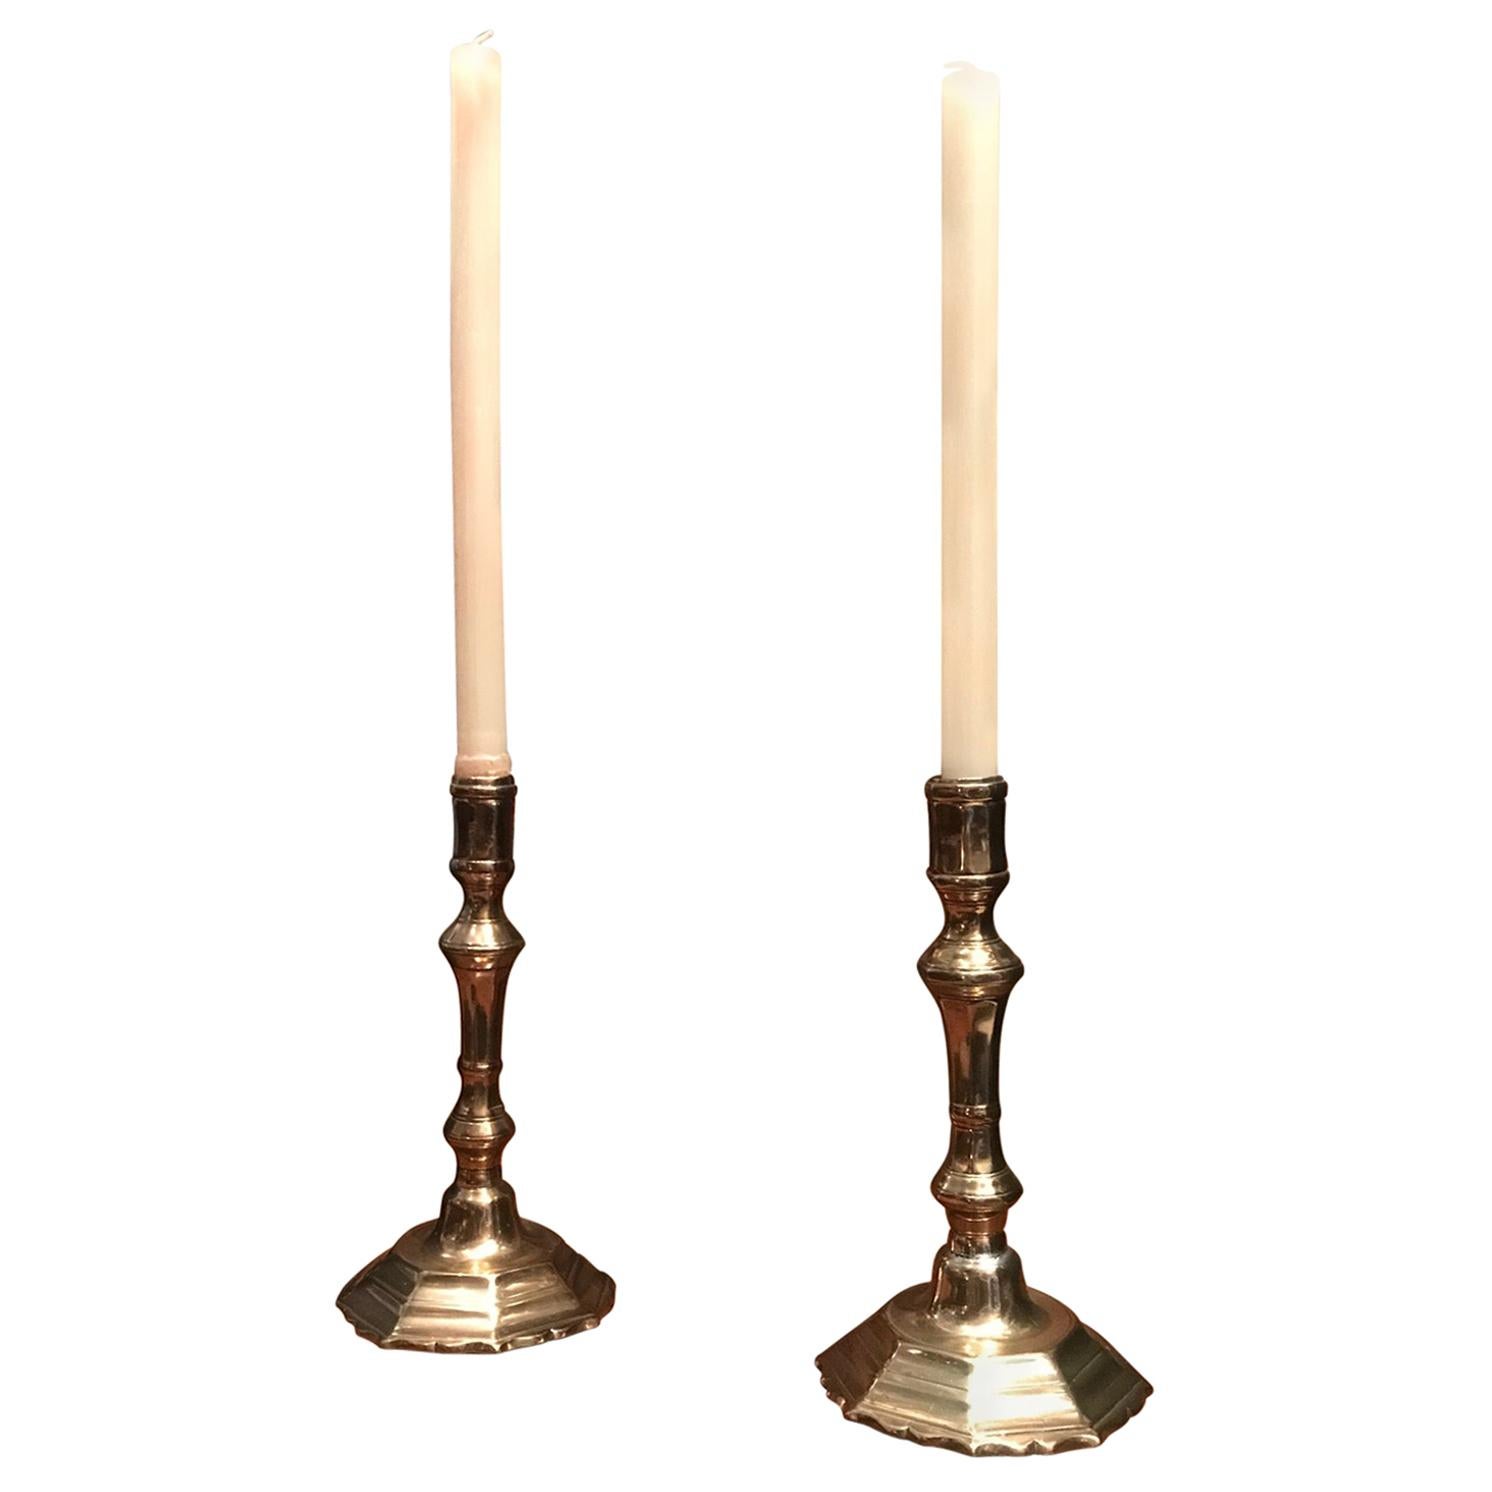 Candlesticks Candleholder Light in Brass Antique Object Decorative Accent, Pair